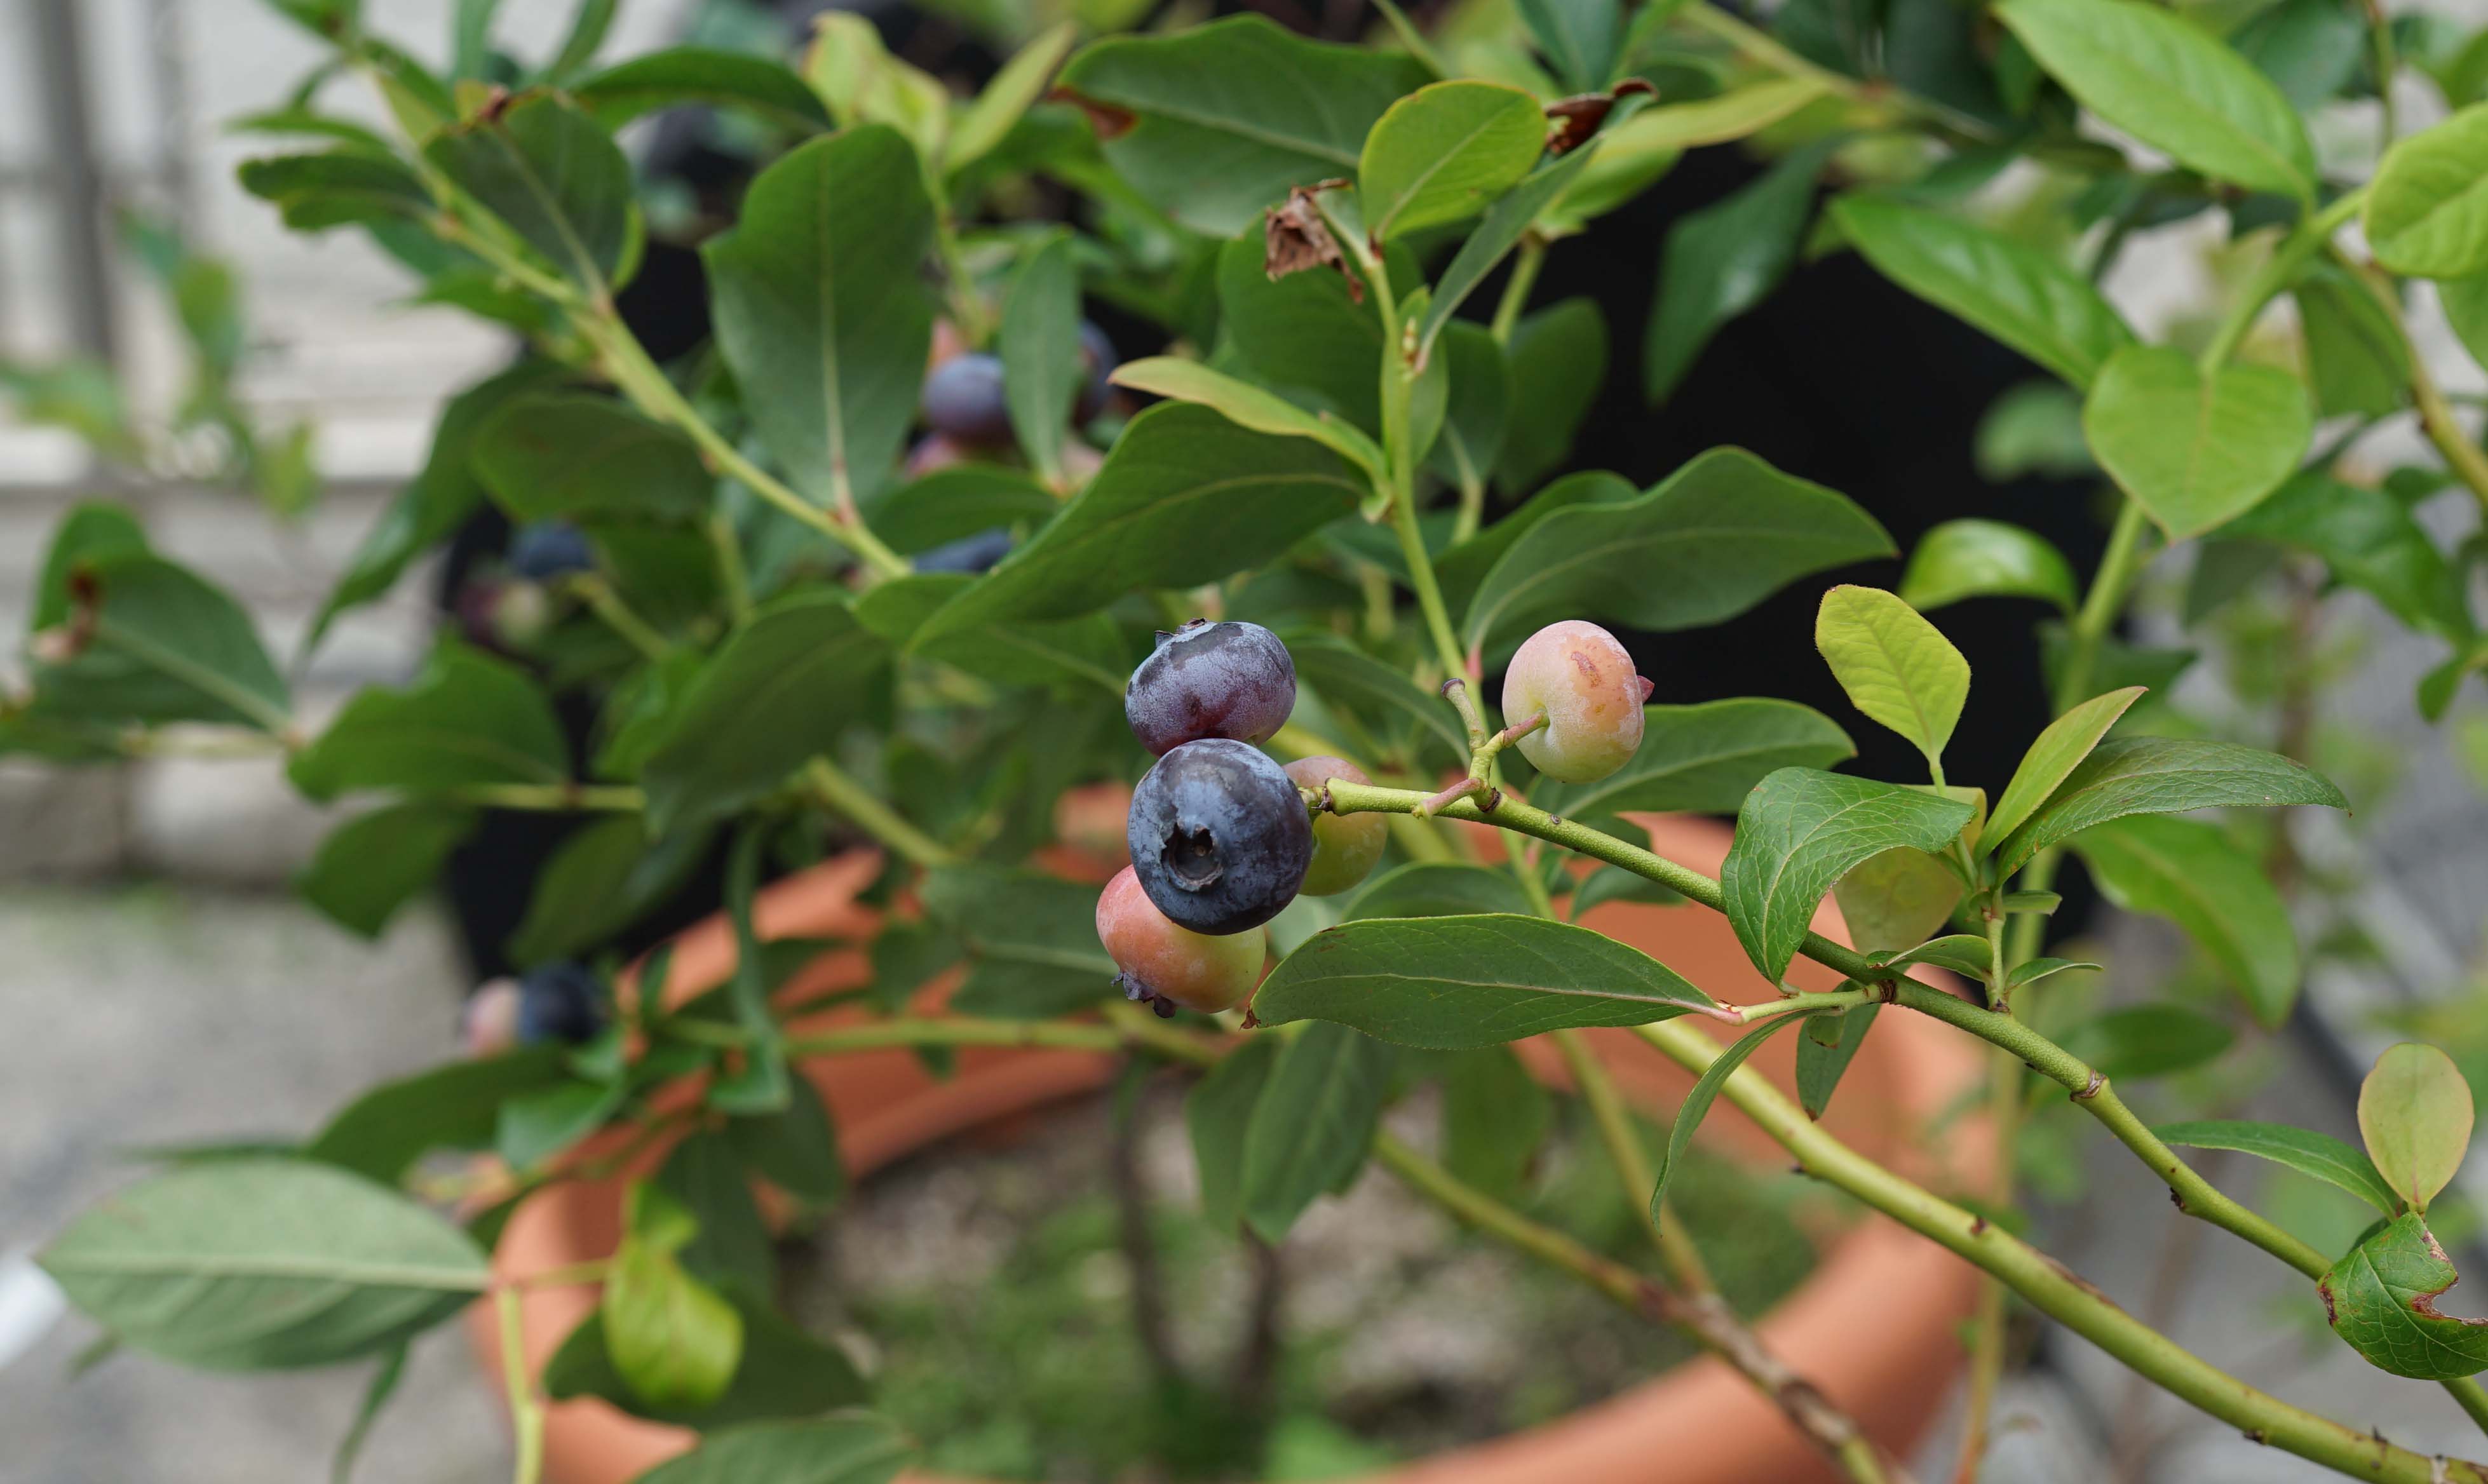 Garden blueberry